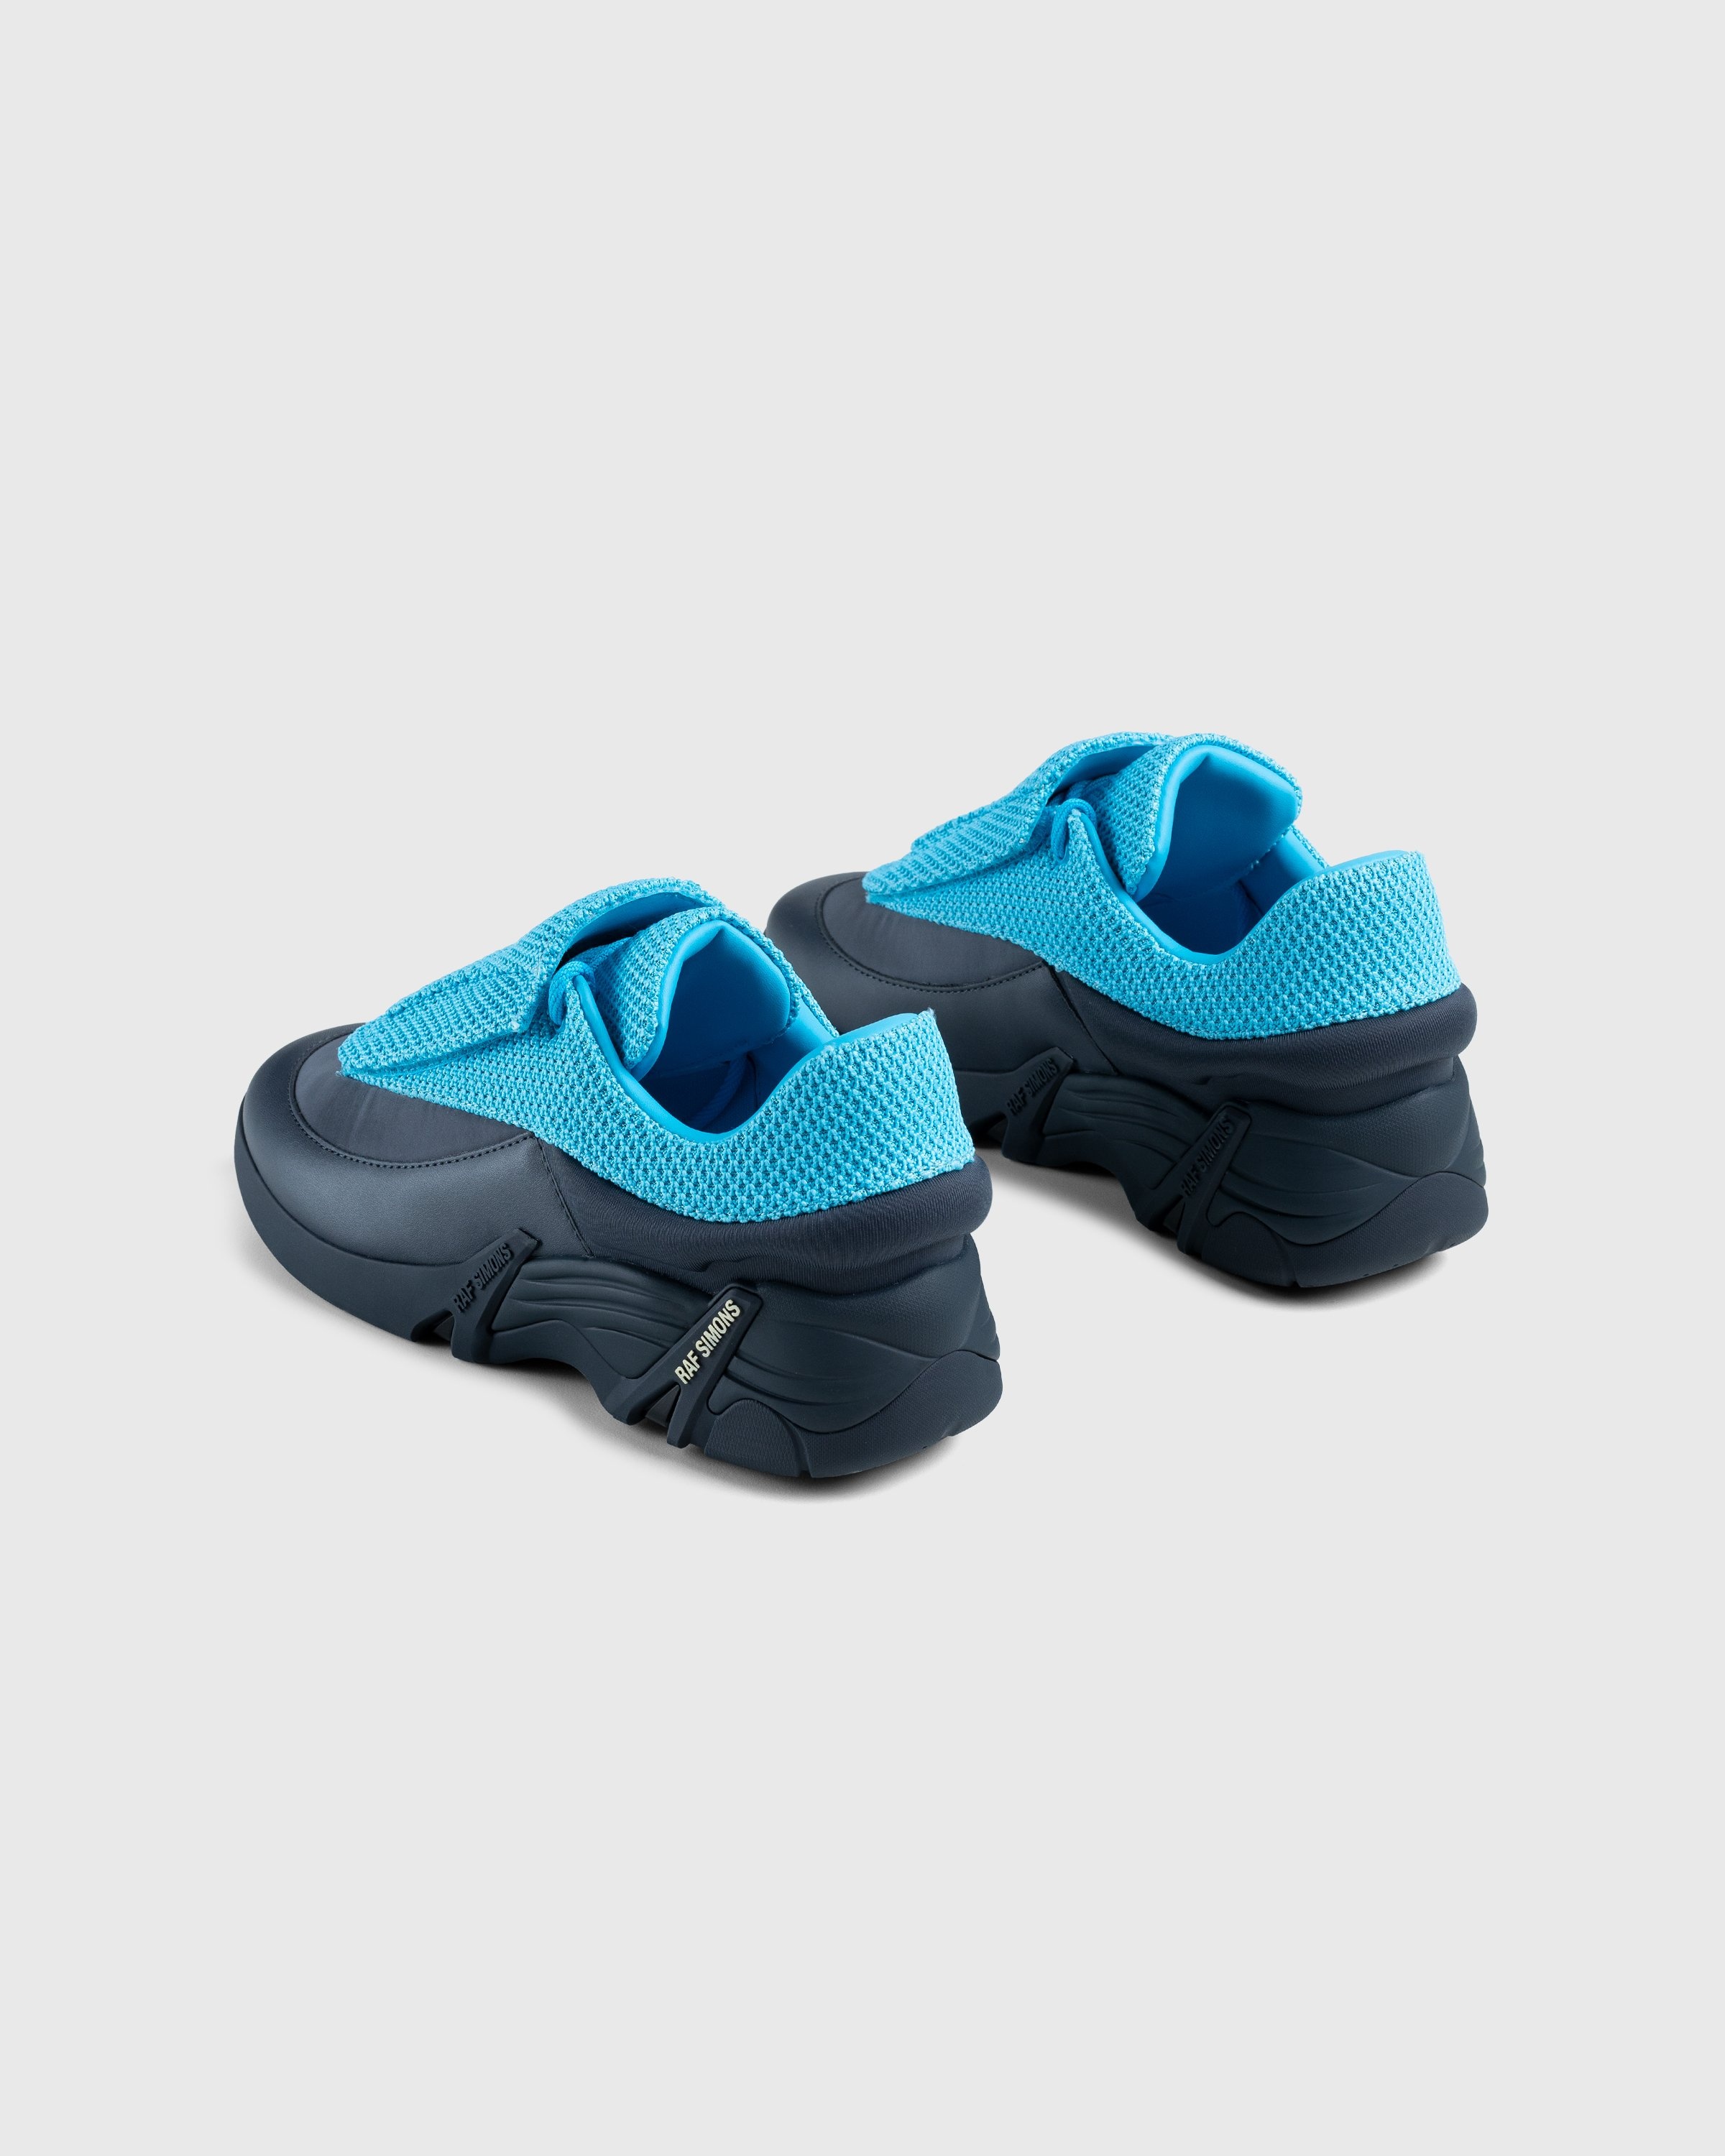 Raf Simons – Antei Aqua - Sneakers - Blue - Image 4